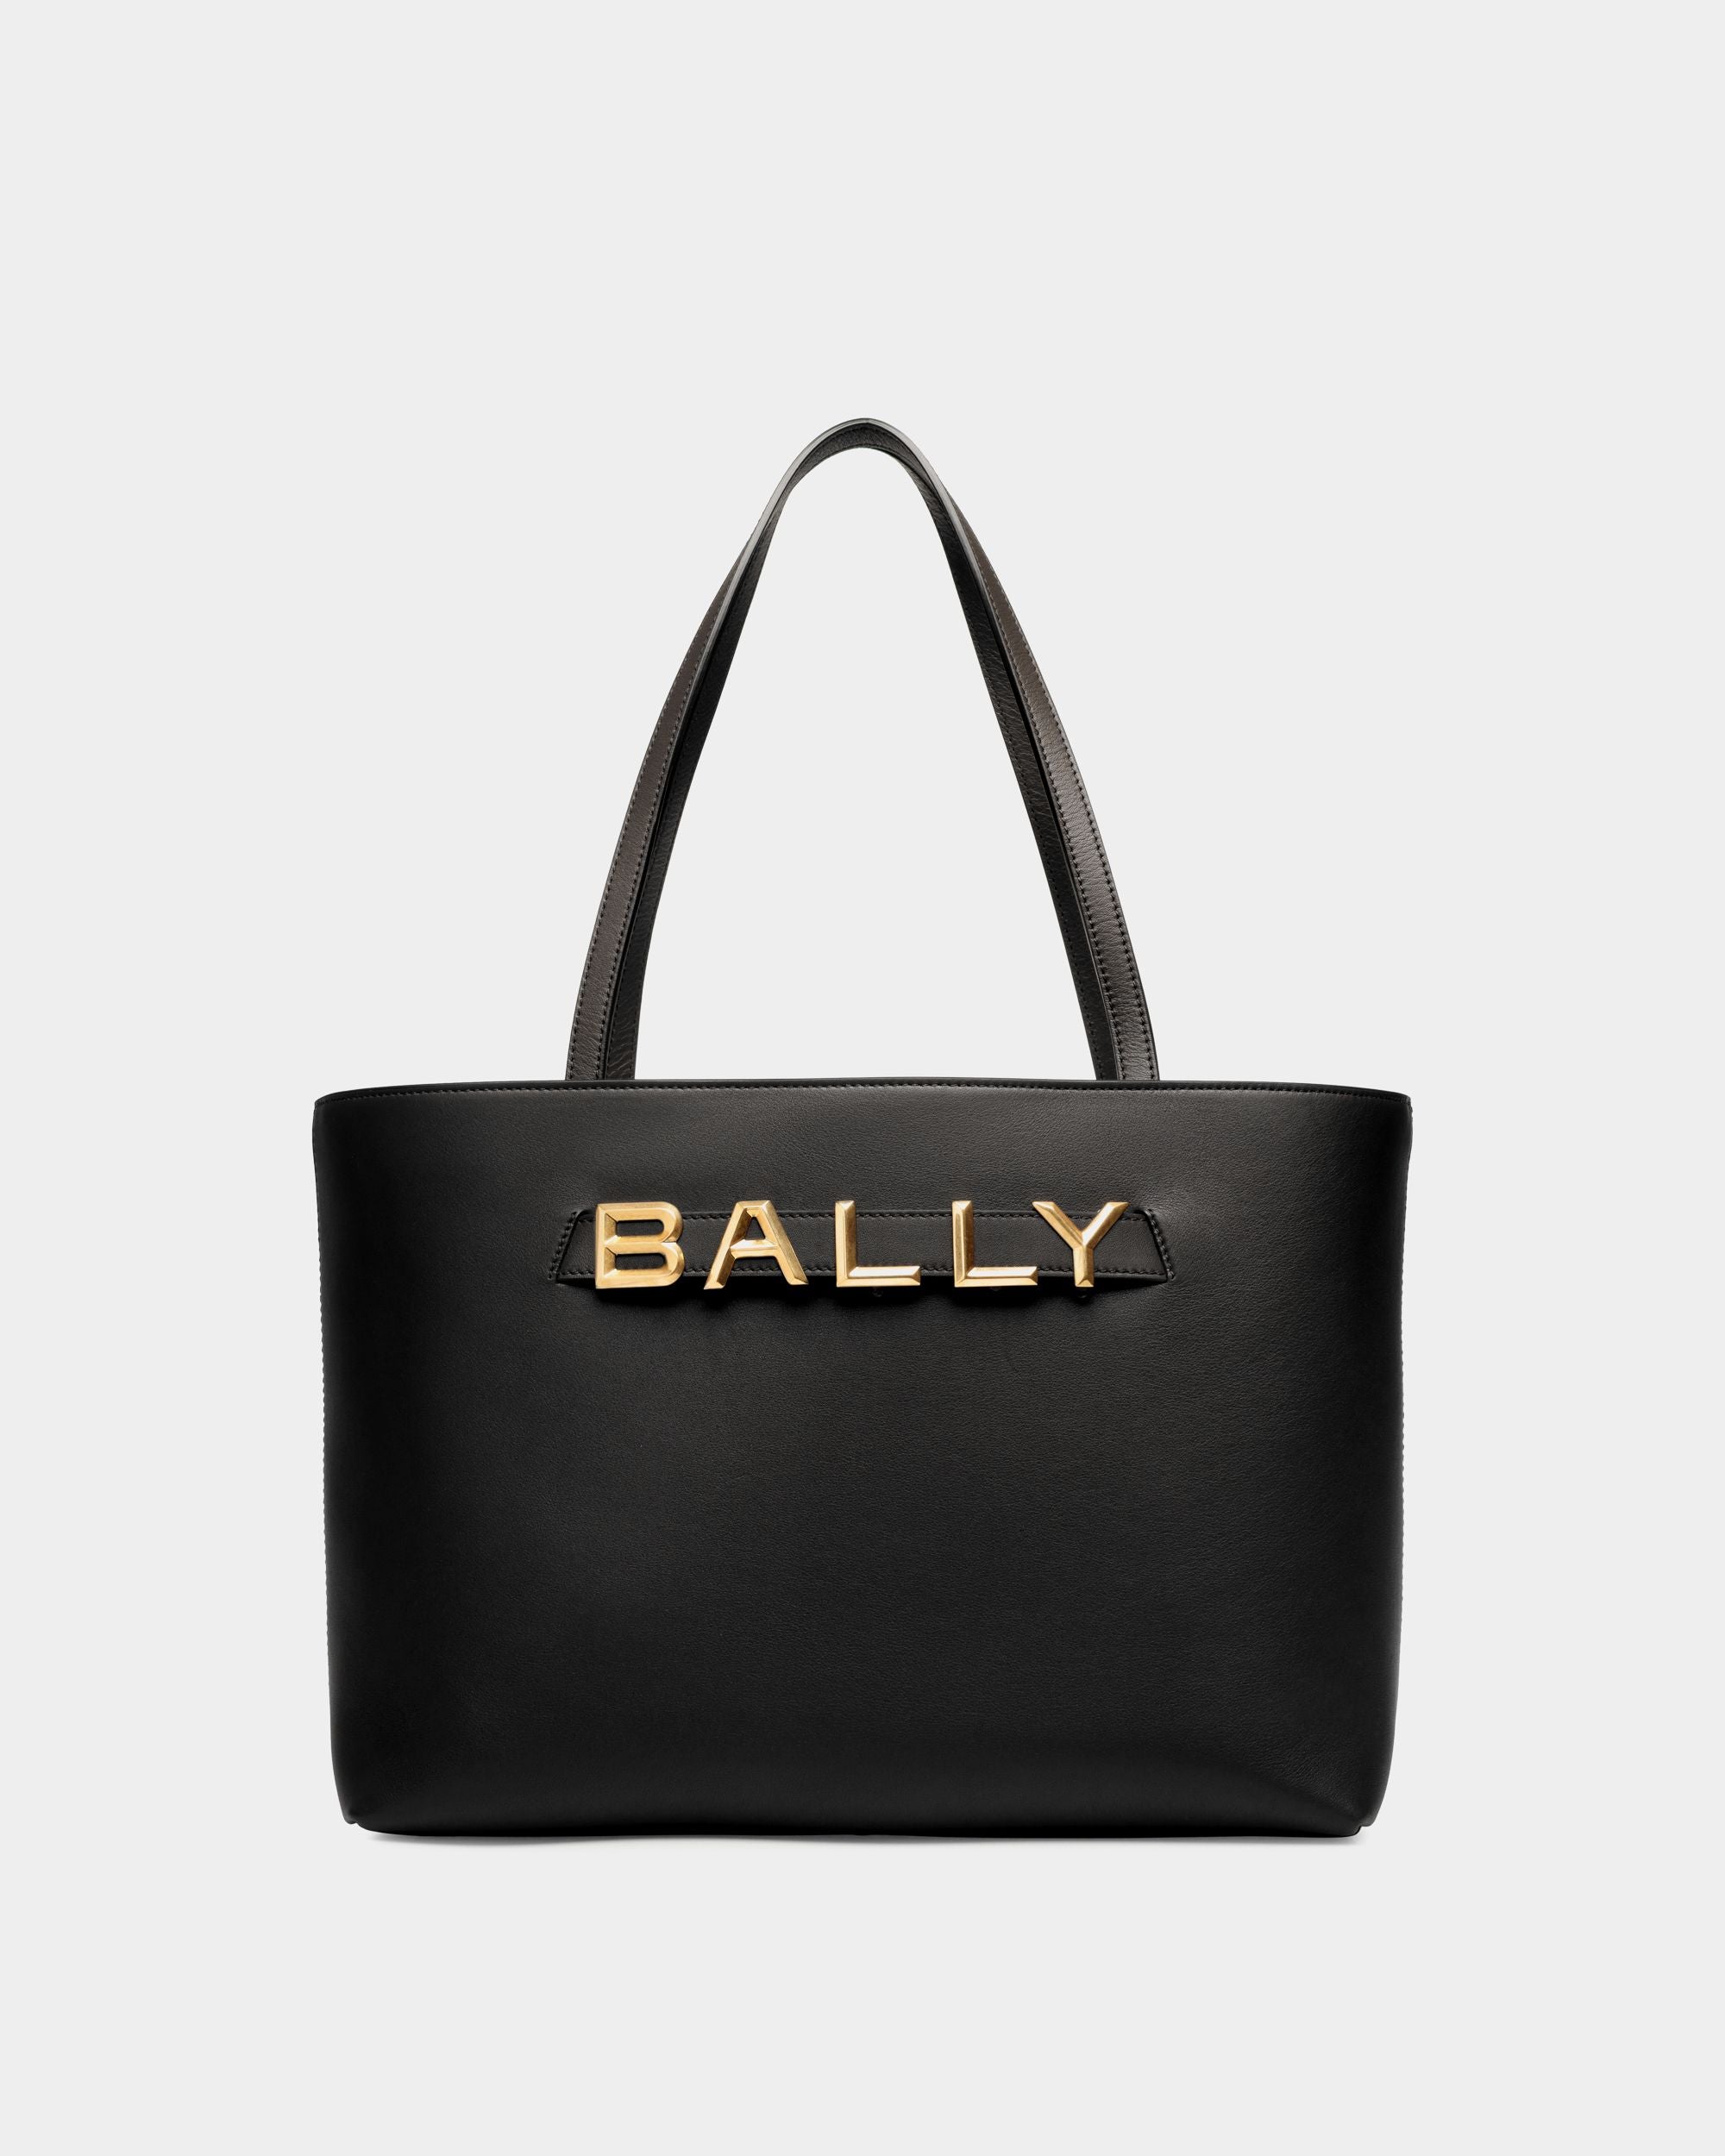 Bally Spell | Sac cabas pour femme en cuir noir | Bally | Still Life Devant